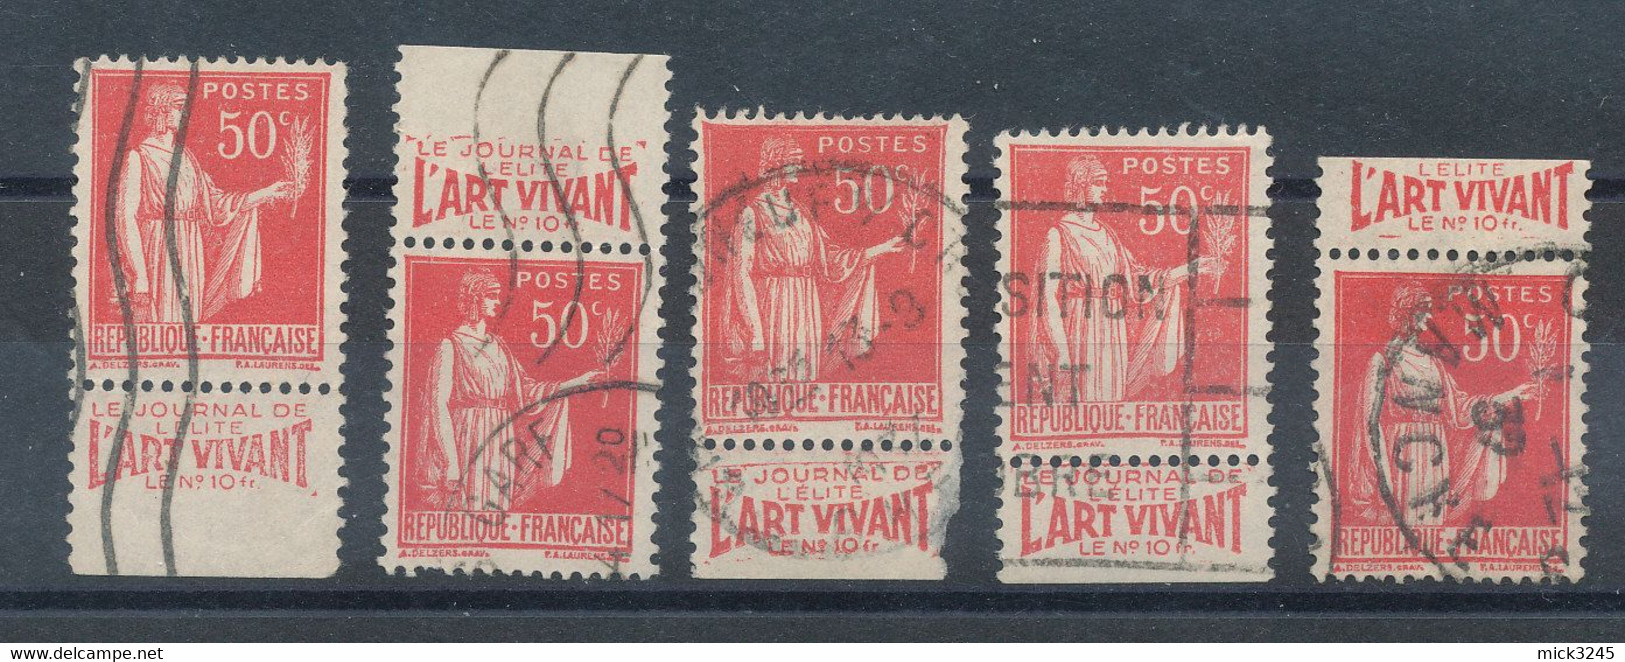 Lot De 5 Timbres Pub "Art Vivant" - Used Stamps